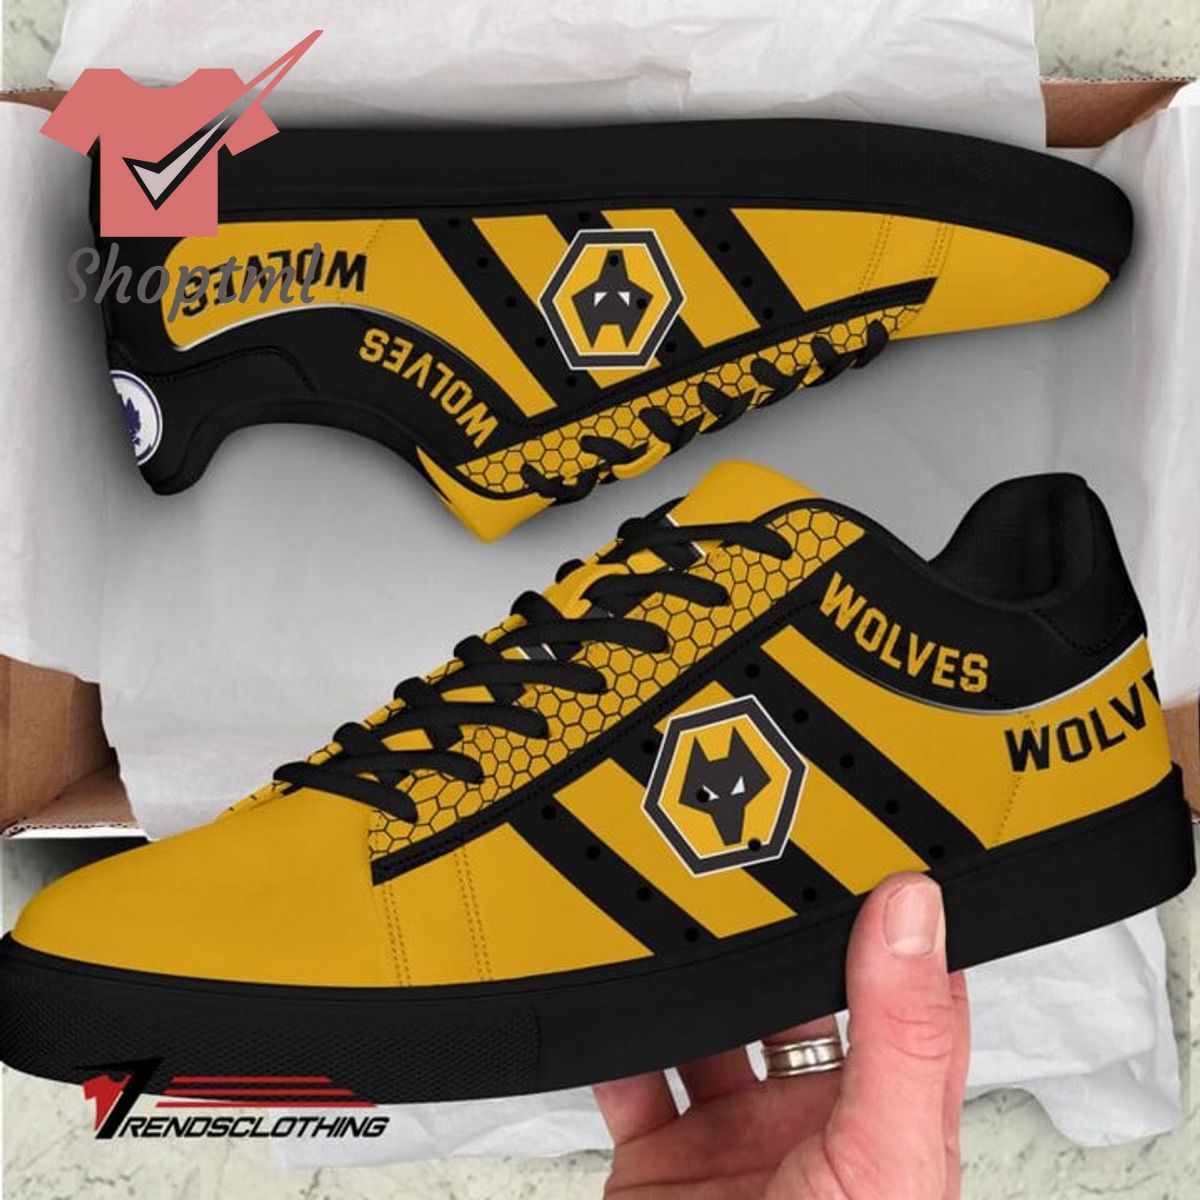 Wolverhampton Wanderers F.C 2023 stan smith skate shoes